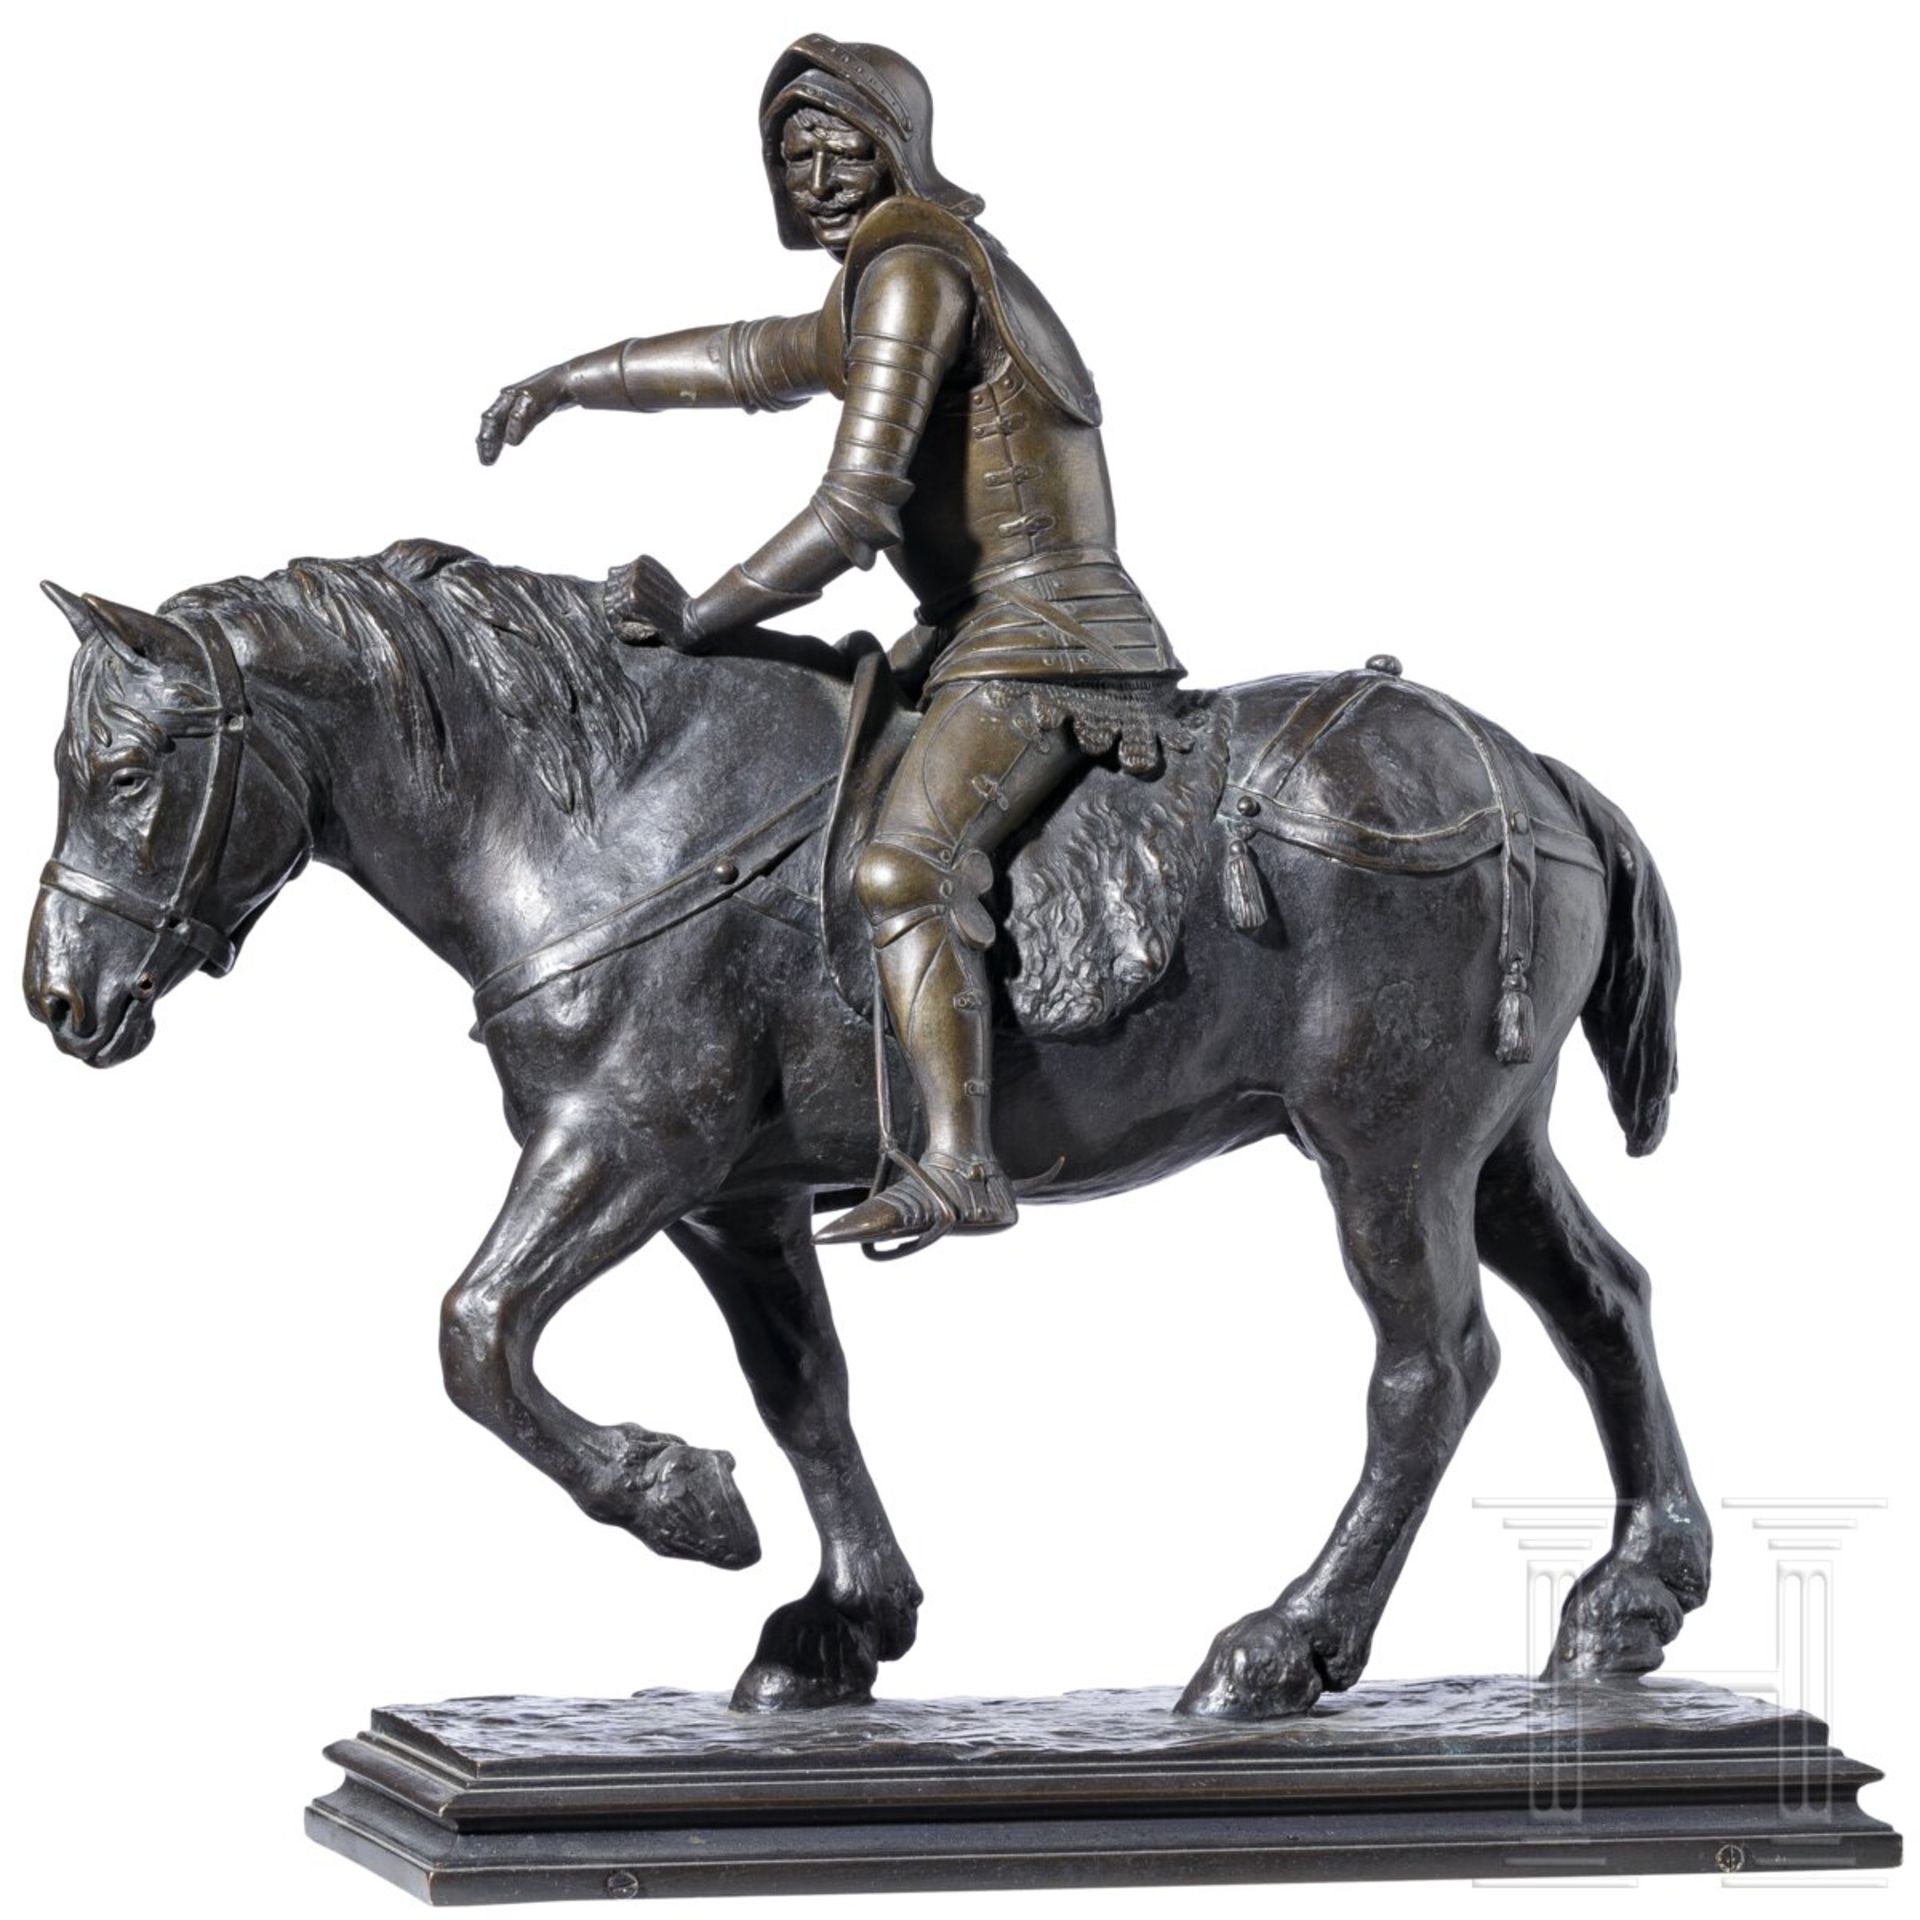 Josef Engelhart(?) - Lachender Ritter zu Pferd, um 1900 - Image 2 of 5